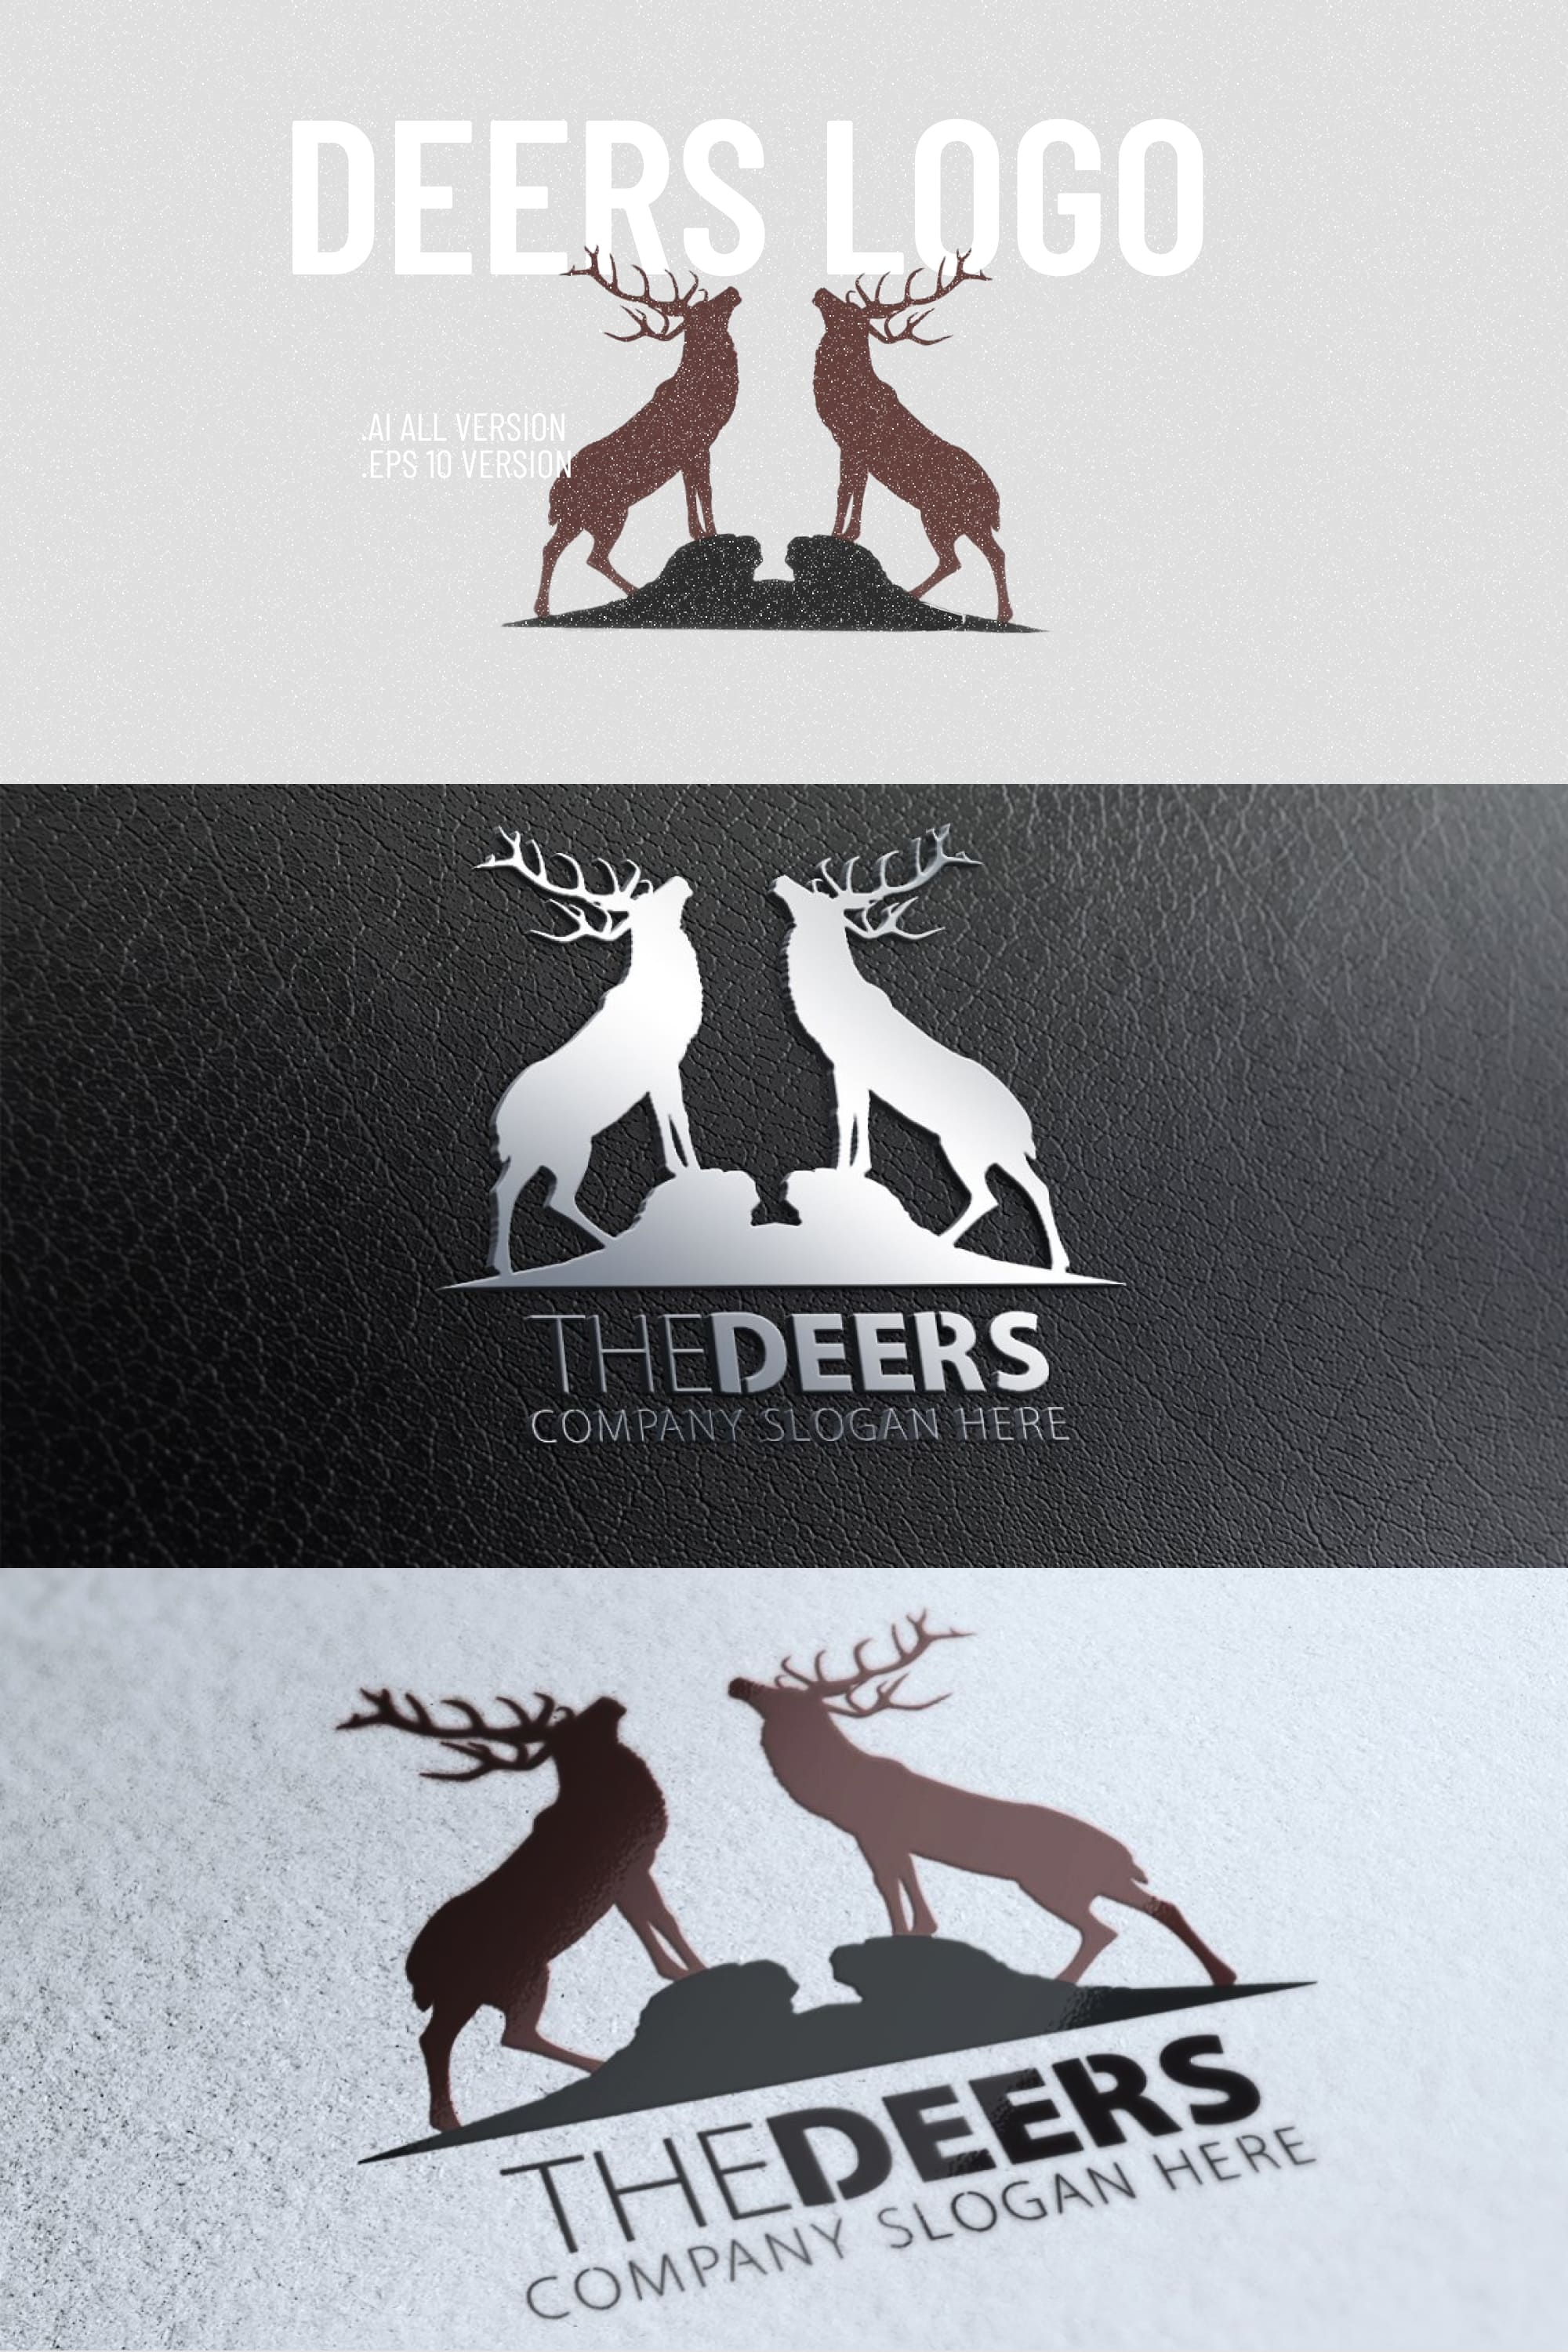 deers logo pinterest3